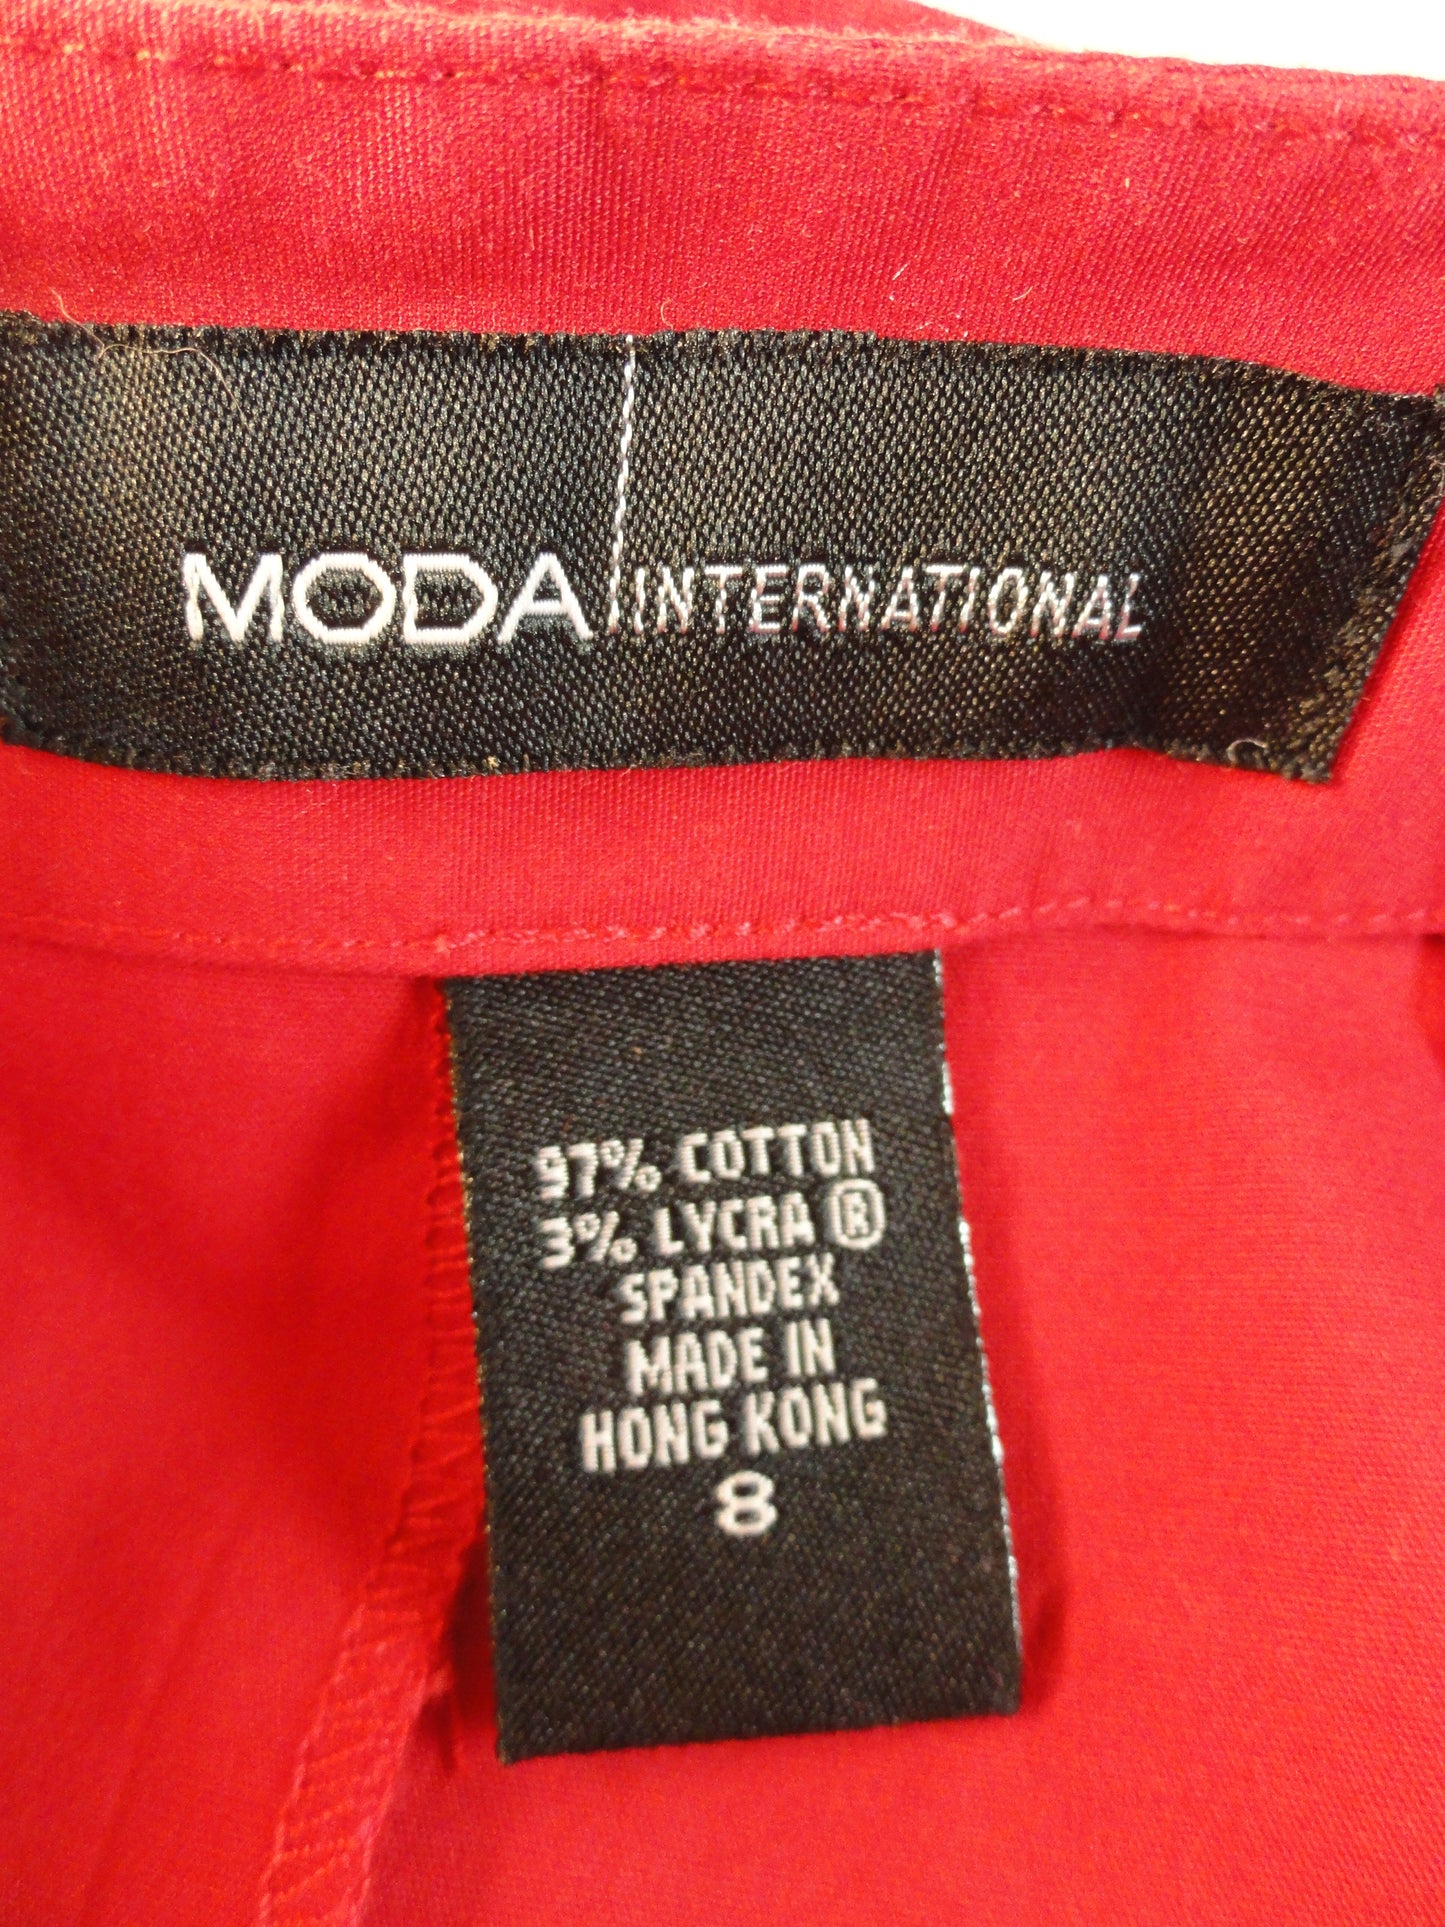 Moda International 80's Skirt Red Size 8 SKU 000054 – Designers On A Dime